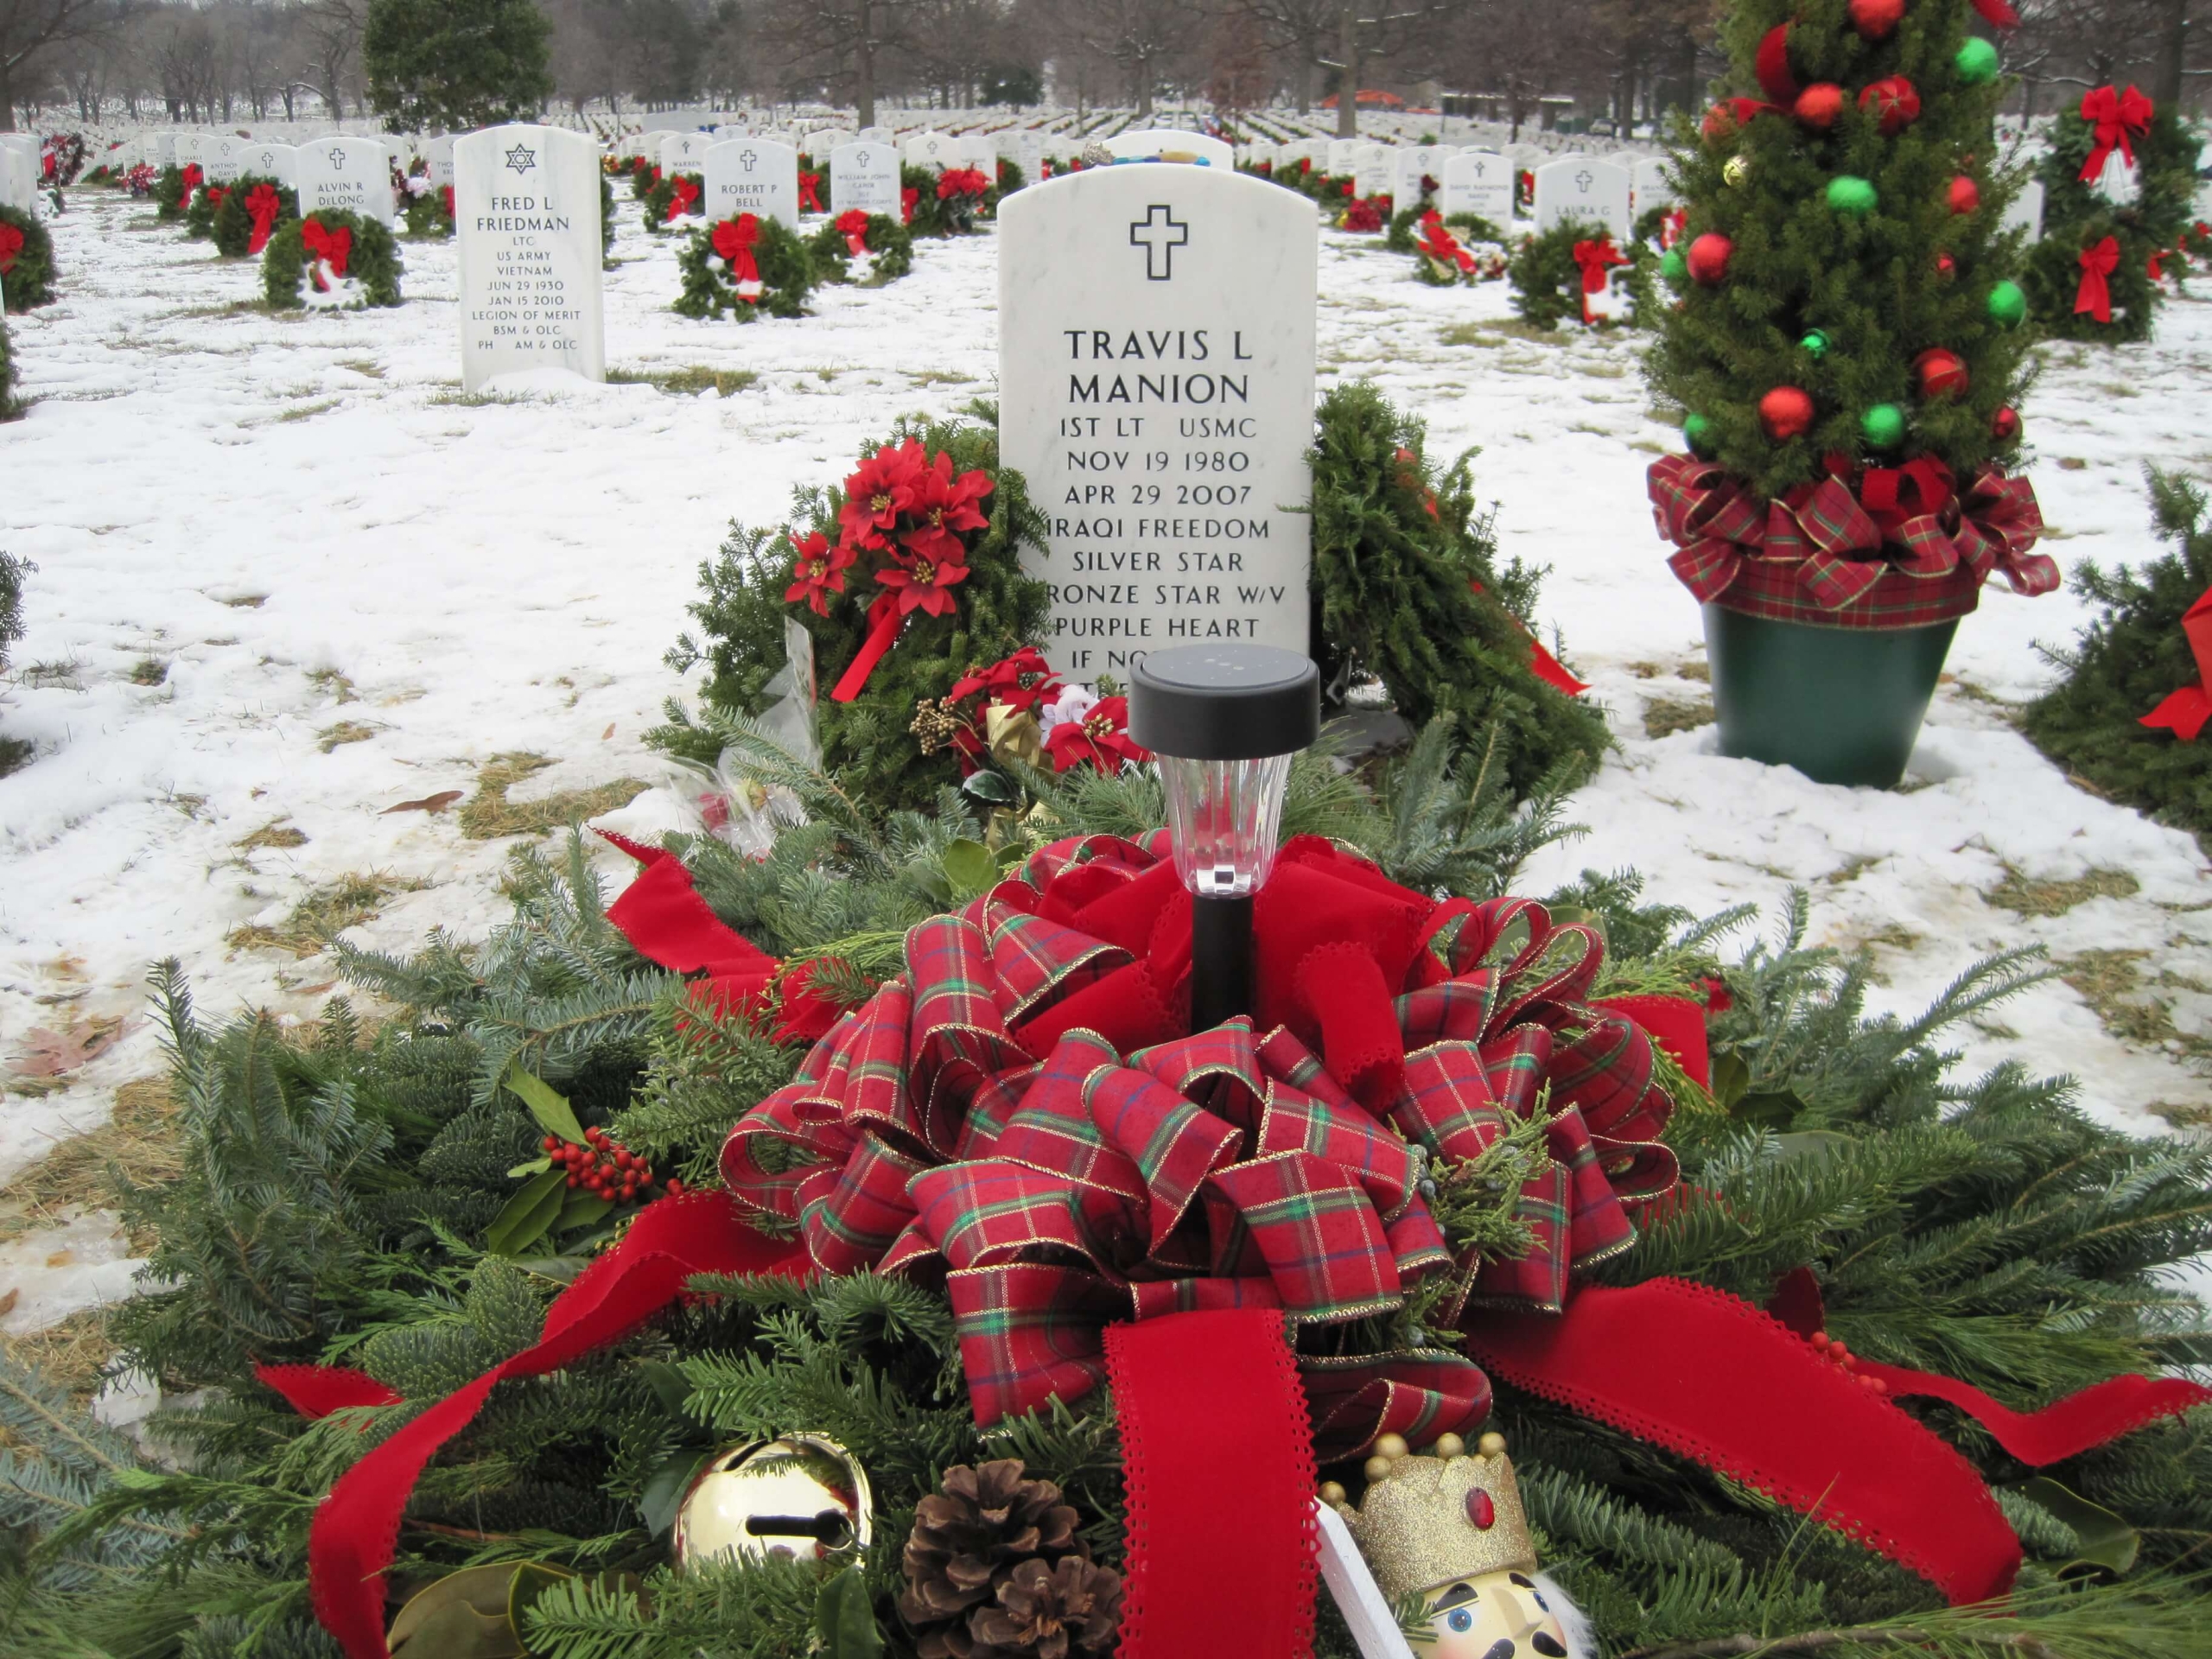 tlmanion-gravesite-photo-by-eileen-horan-december-2010-003